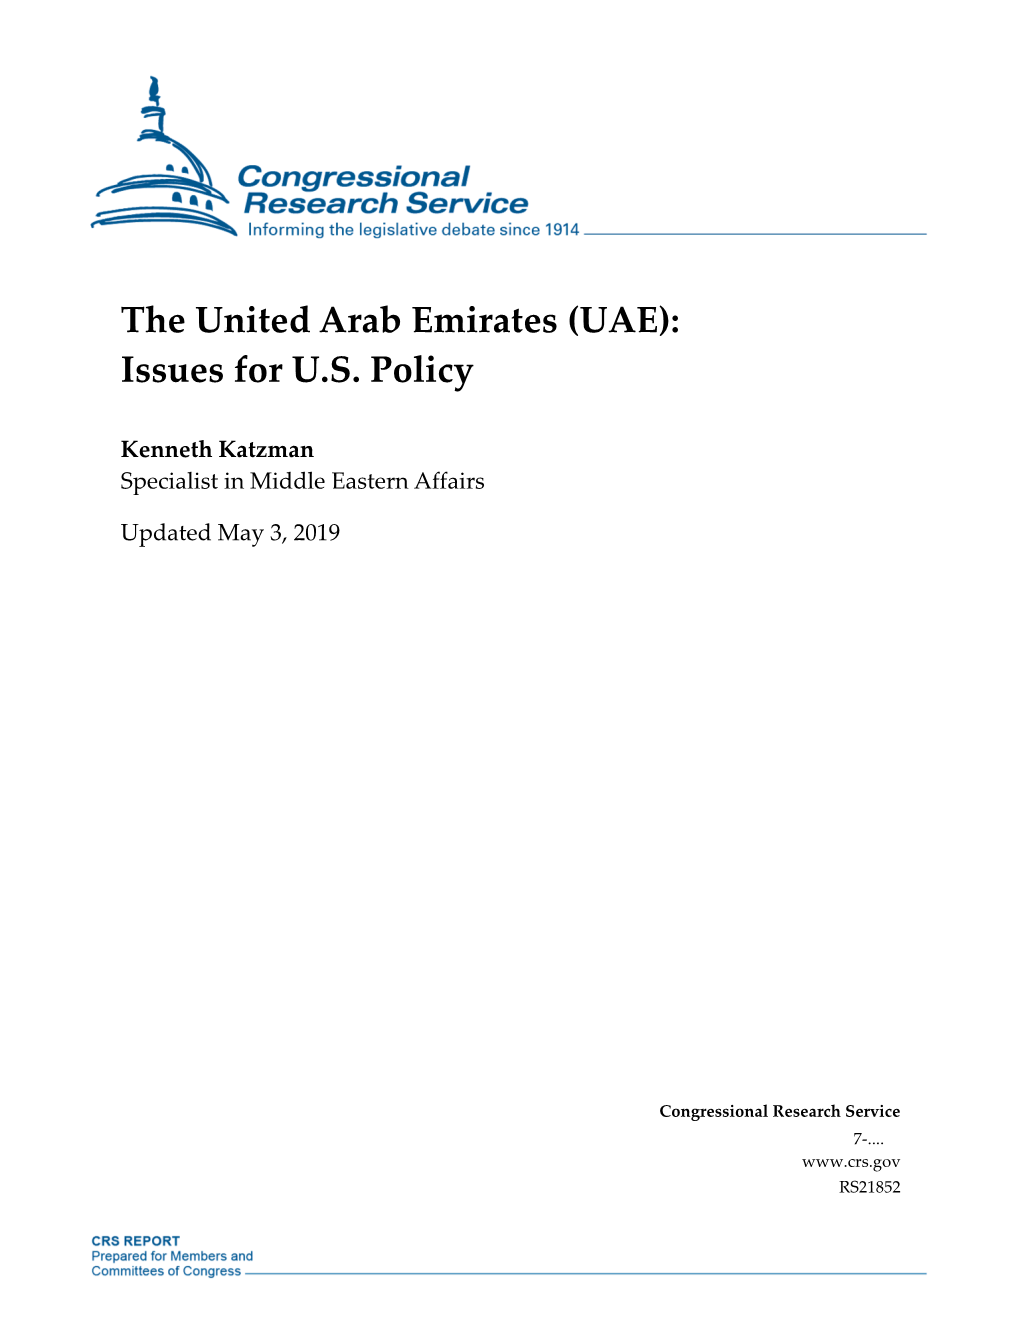 UAE): Issues for U.S